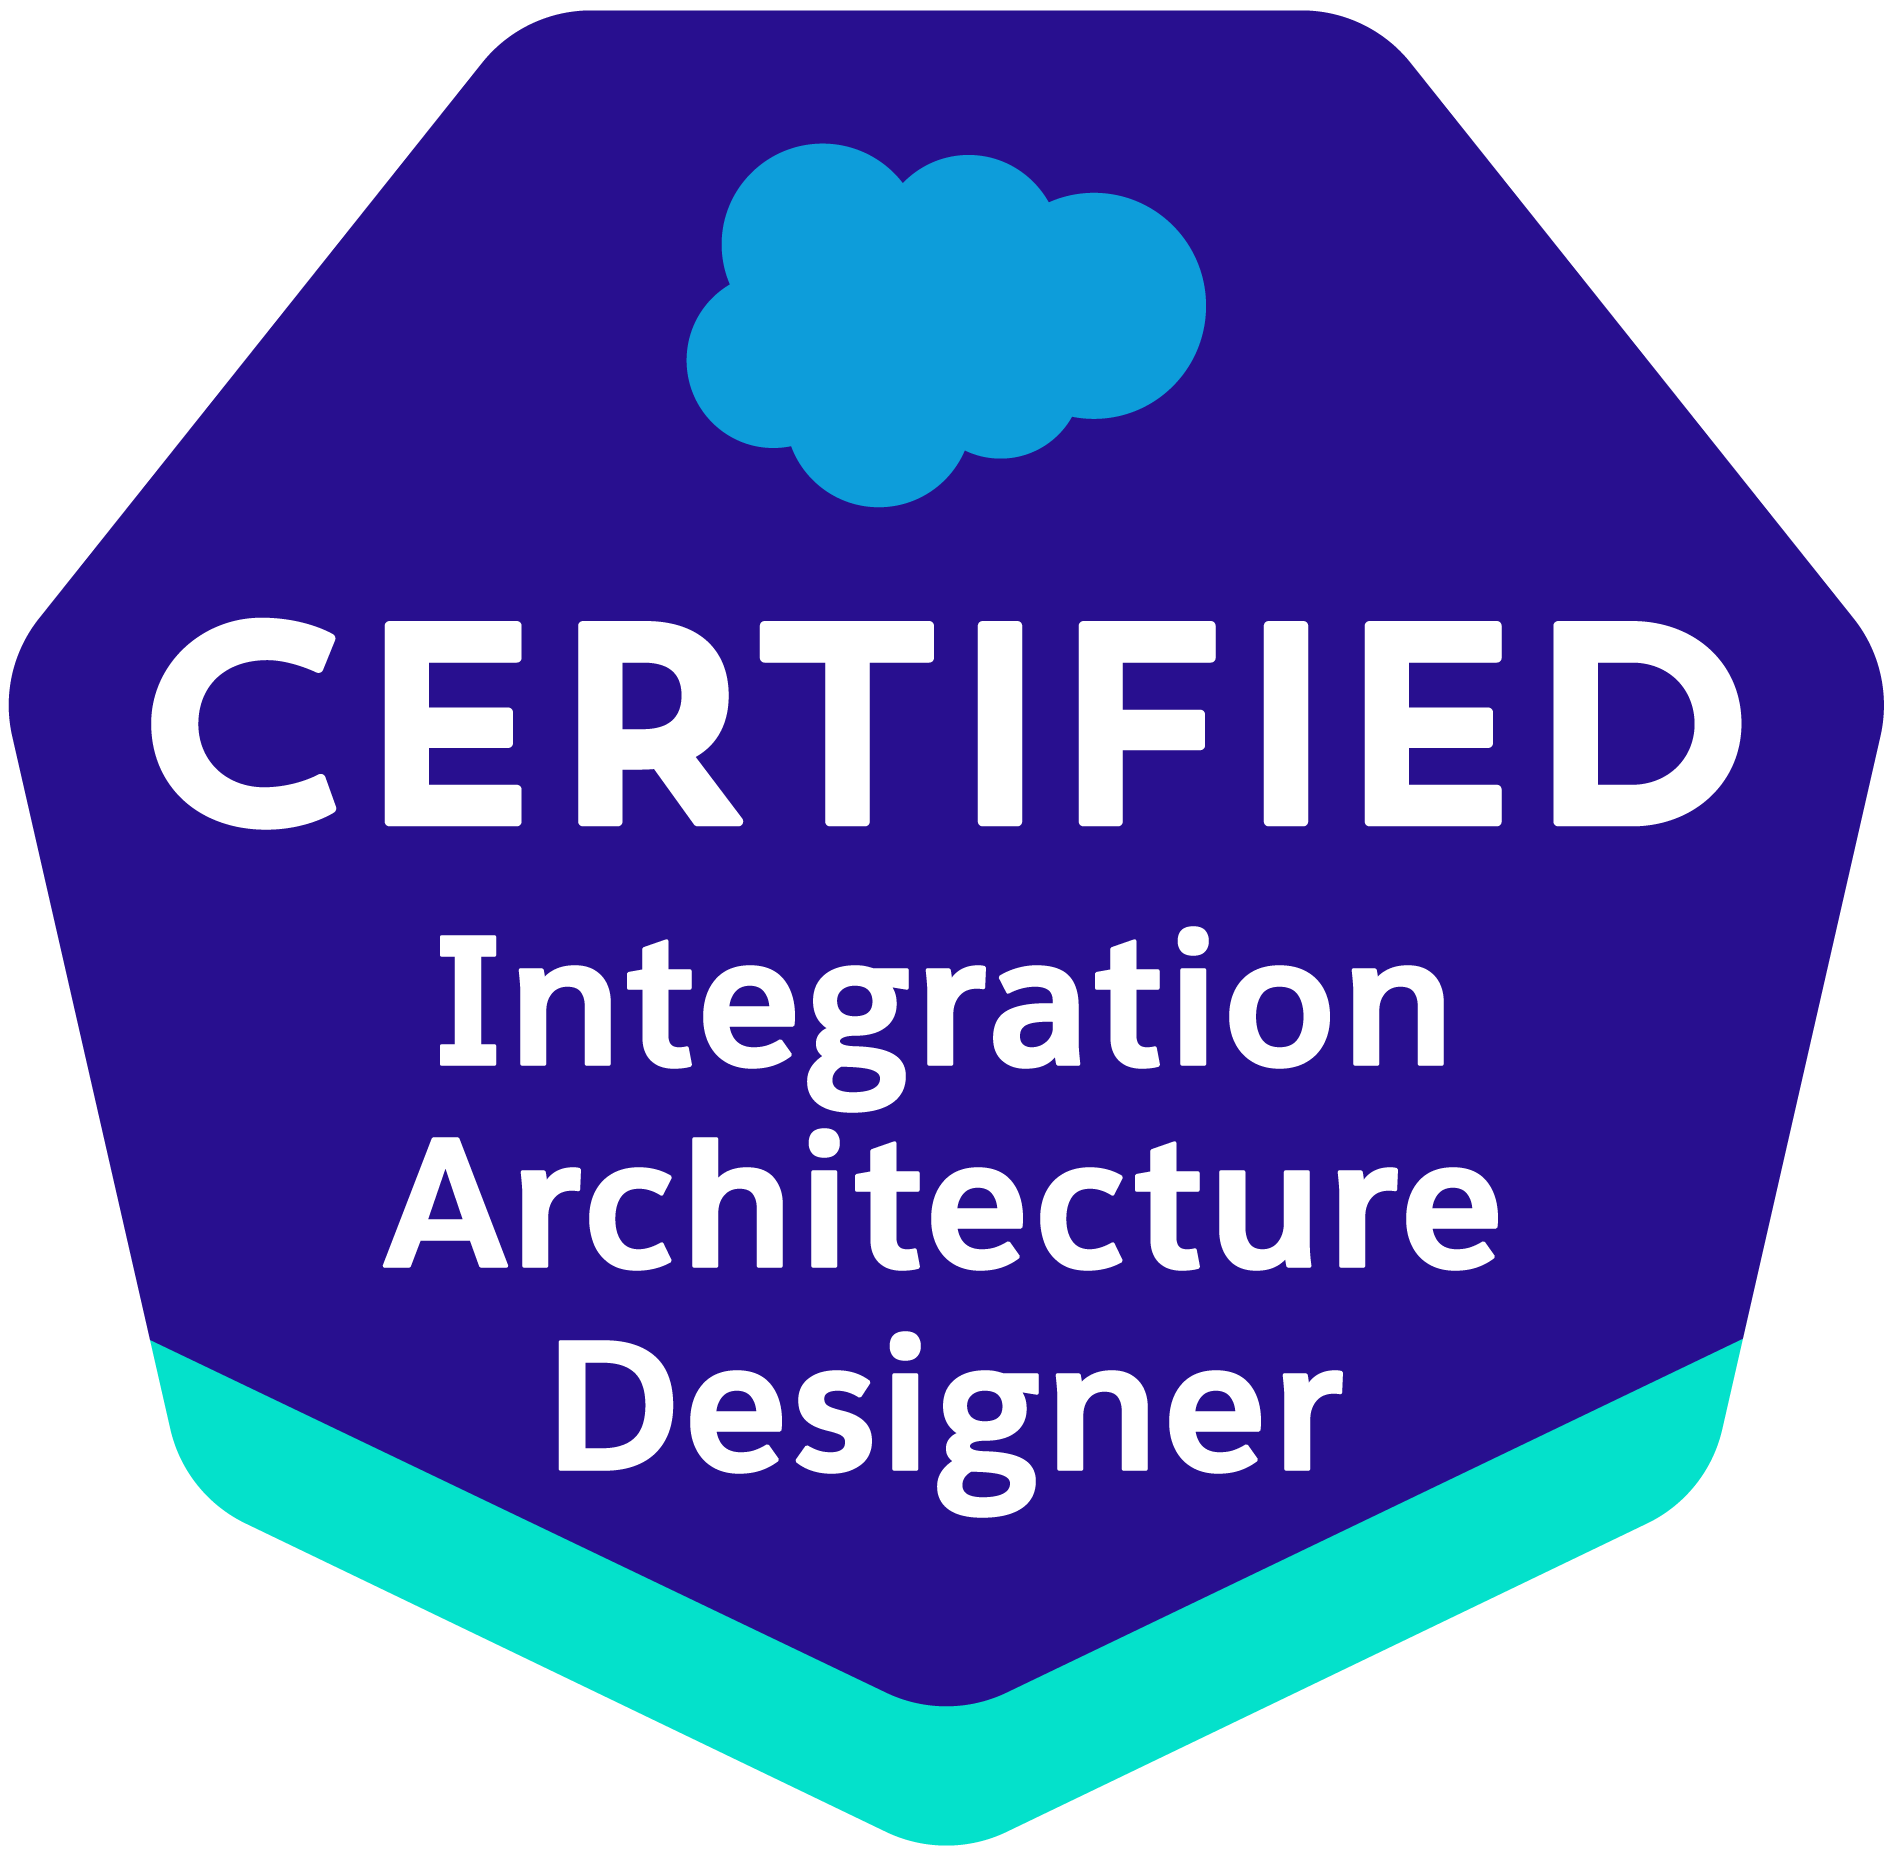 Salesforce Certified Integration Architecture Designer